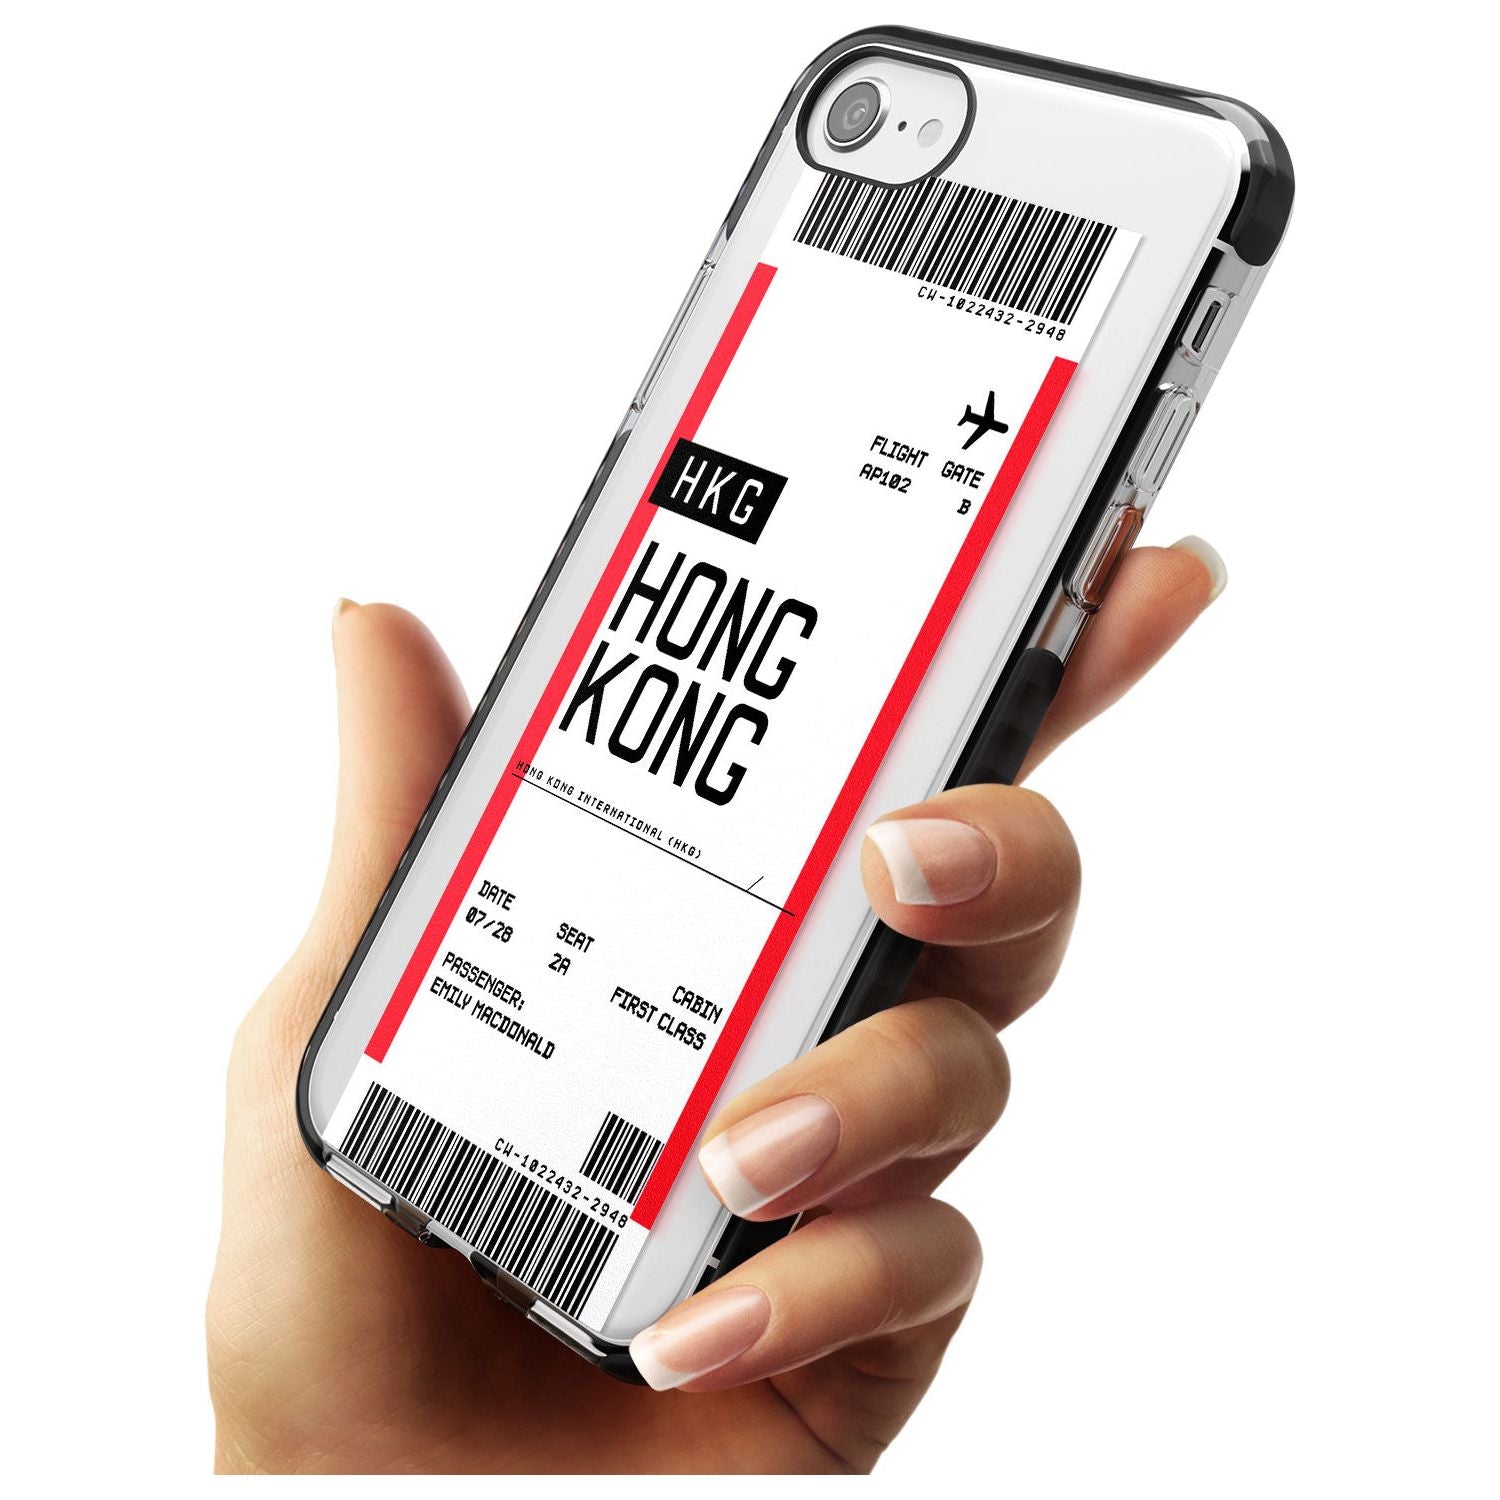 Hong Kong Boarding Pass iPhone Case   Custom Phone Case - Case Warehouse